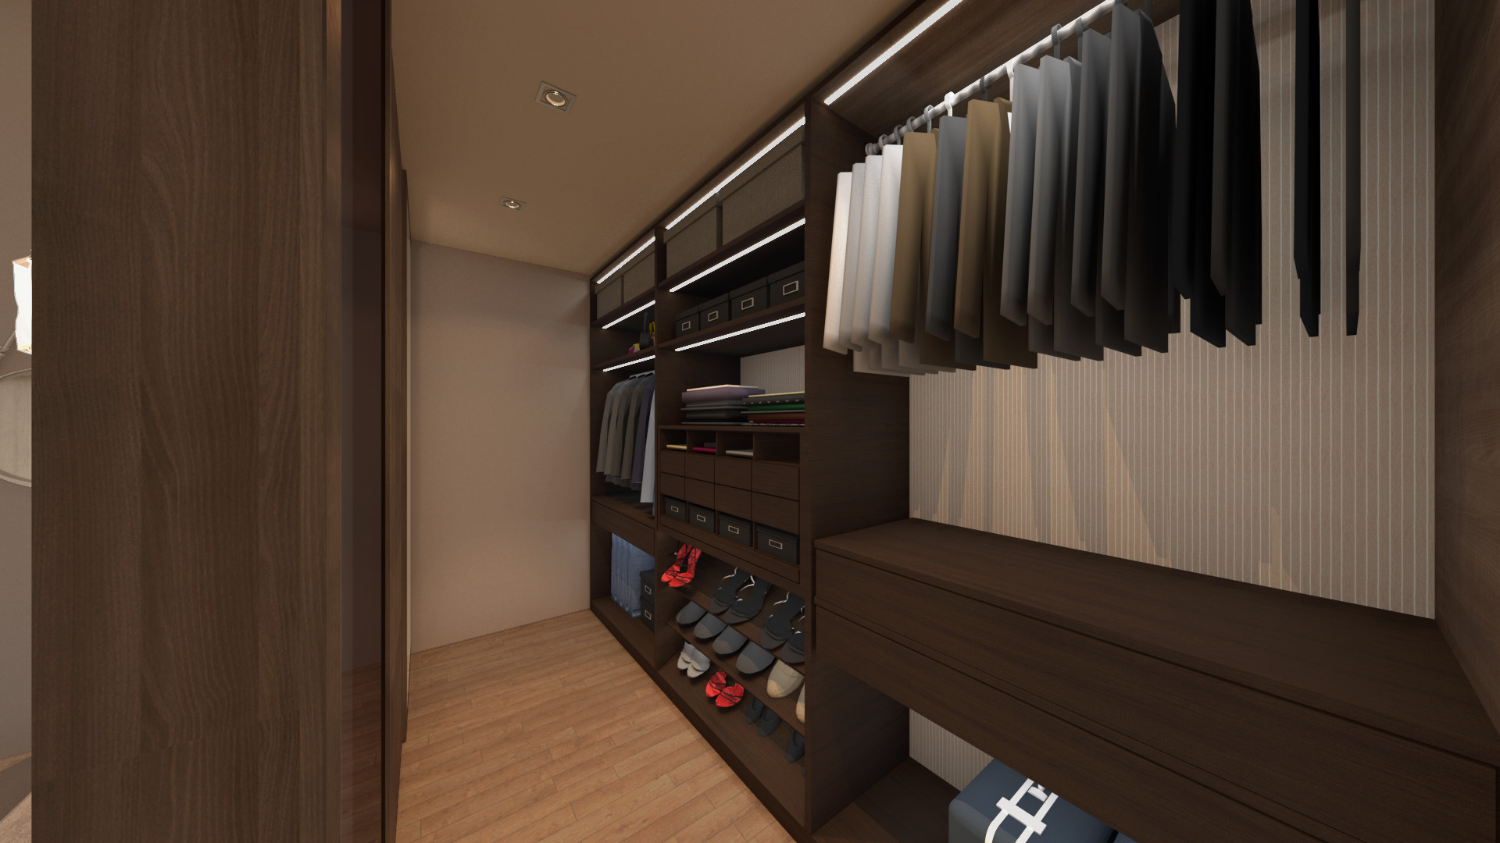 Photorealistic rendering of a walk-in wardrobe interior designed by Elles Interior Design